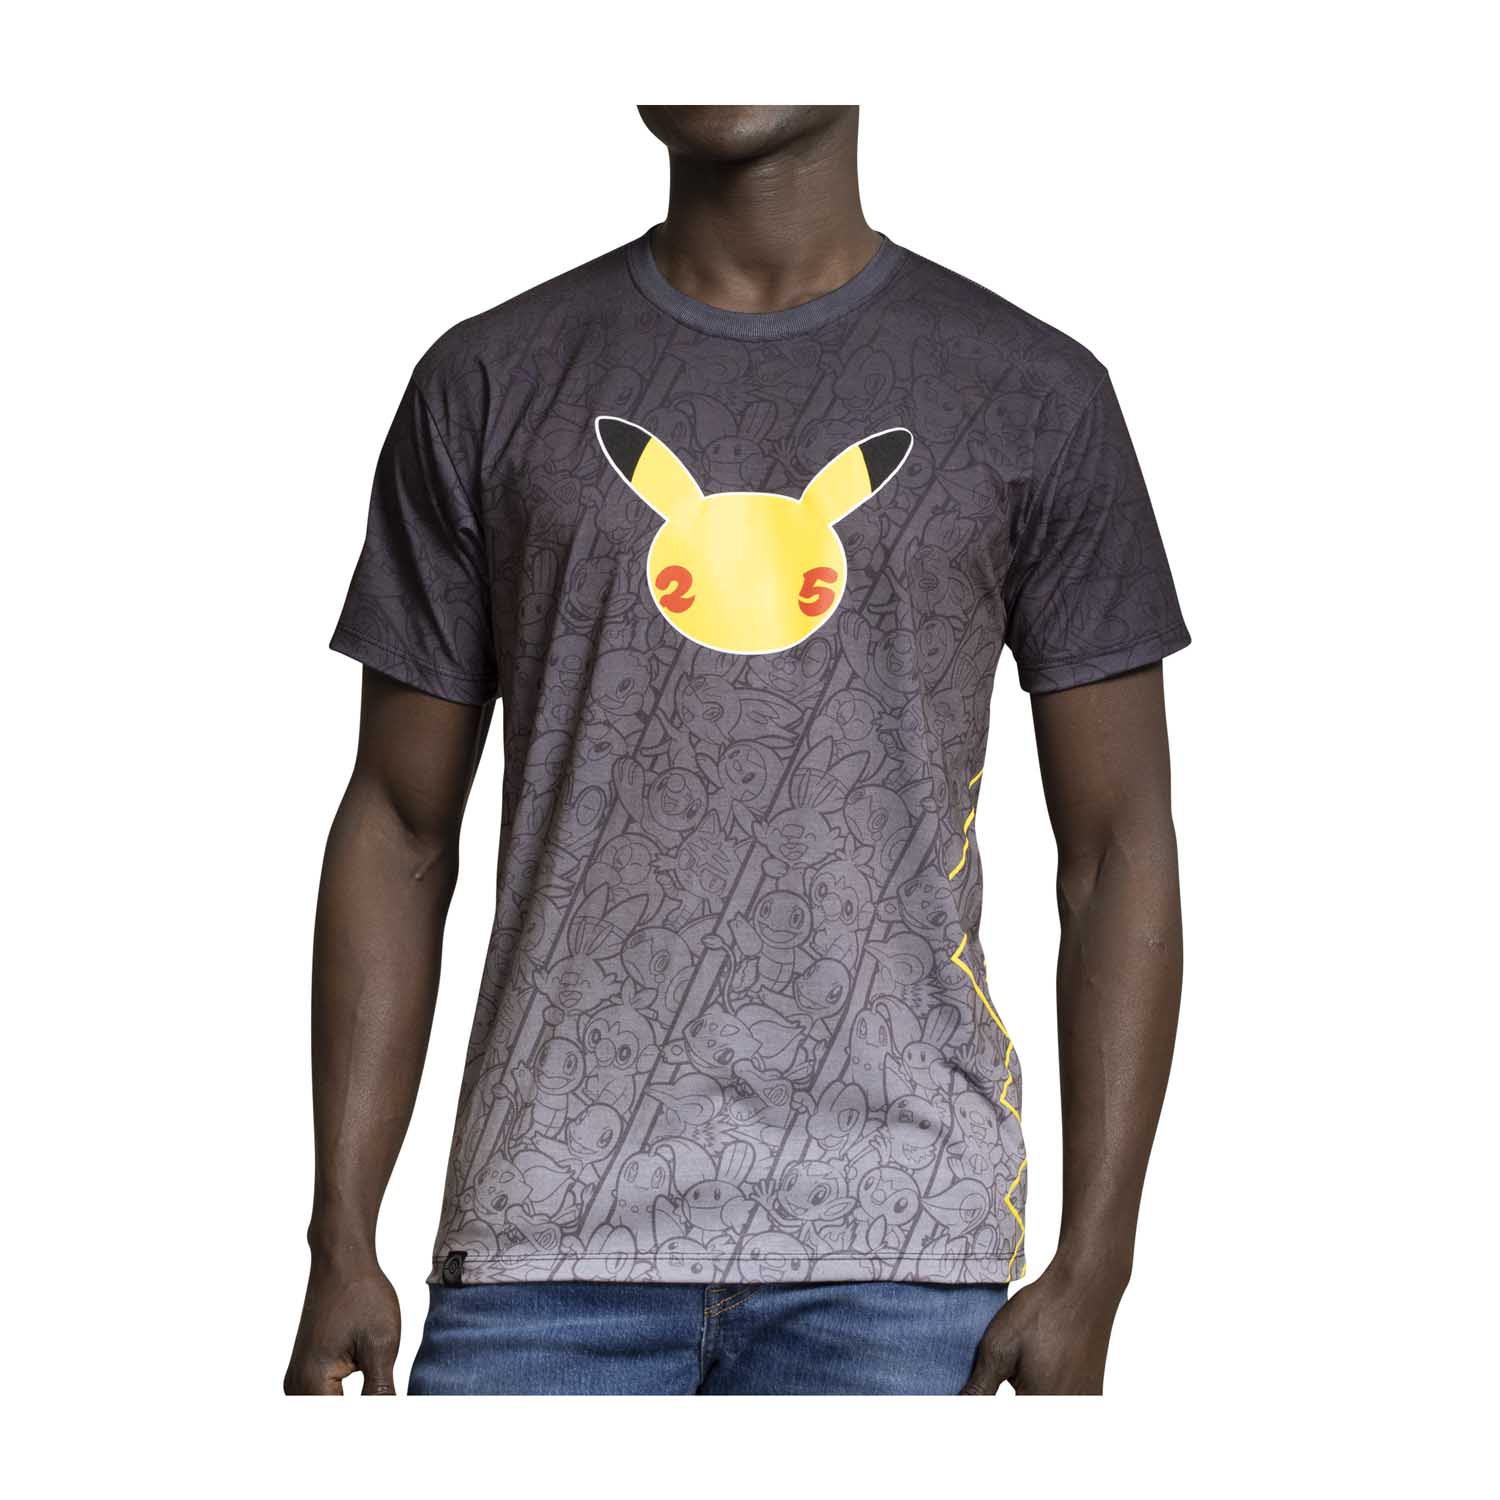 next pokemon t shirt